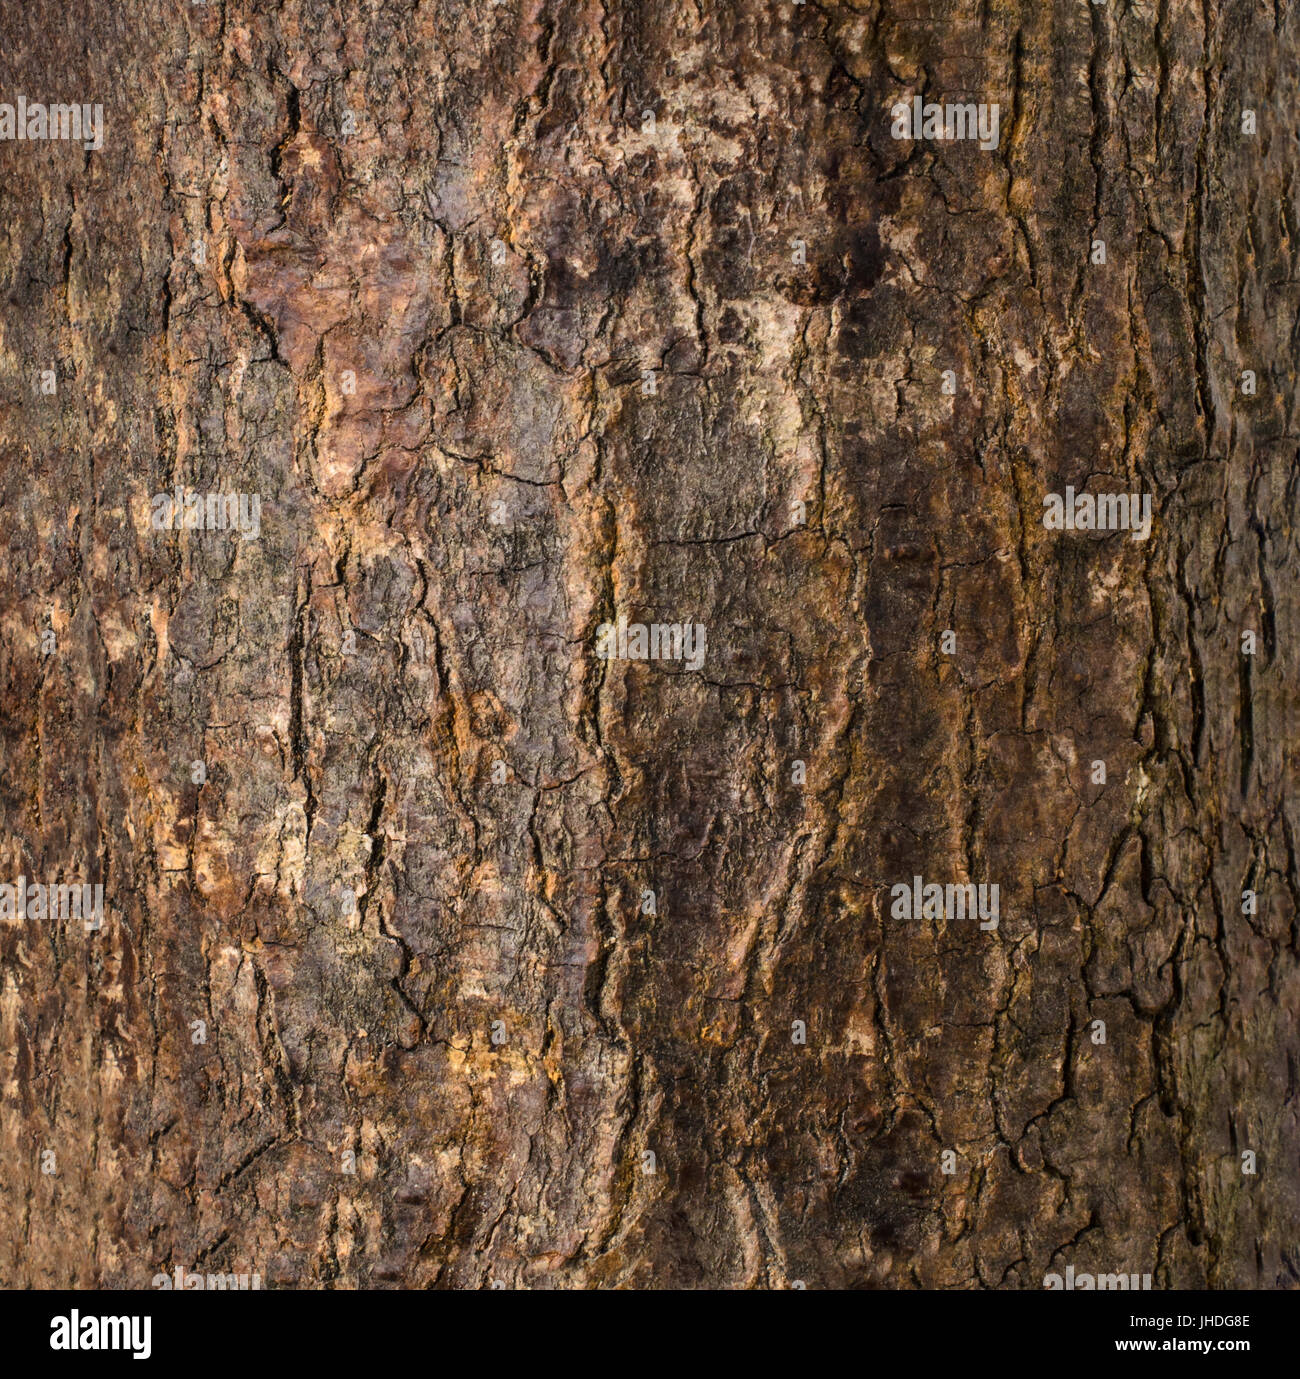 Close up photograph of rough, cracked wood tree bark. Stock Photo